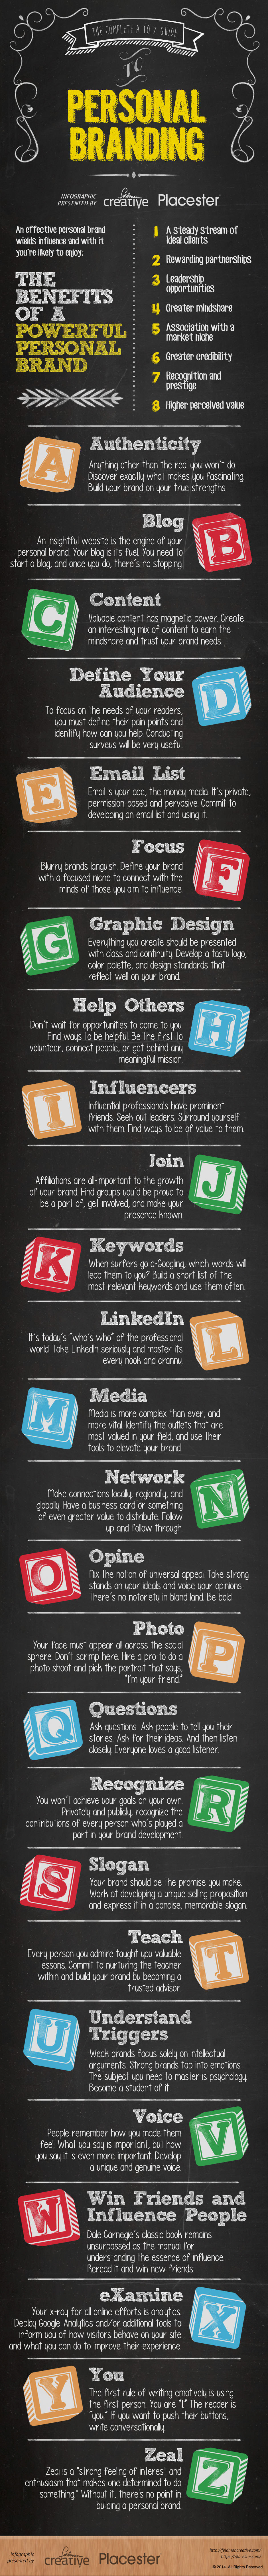 Personal-branding-infographic